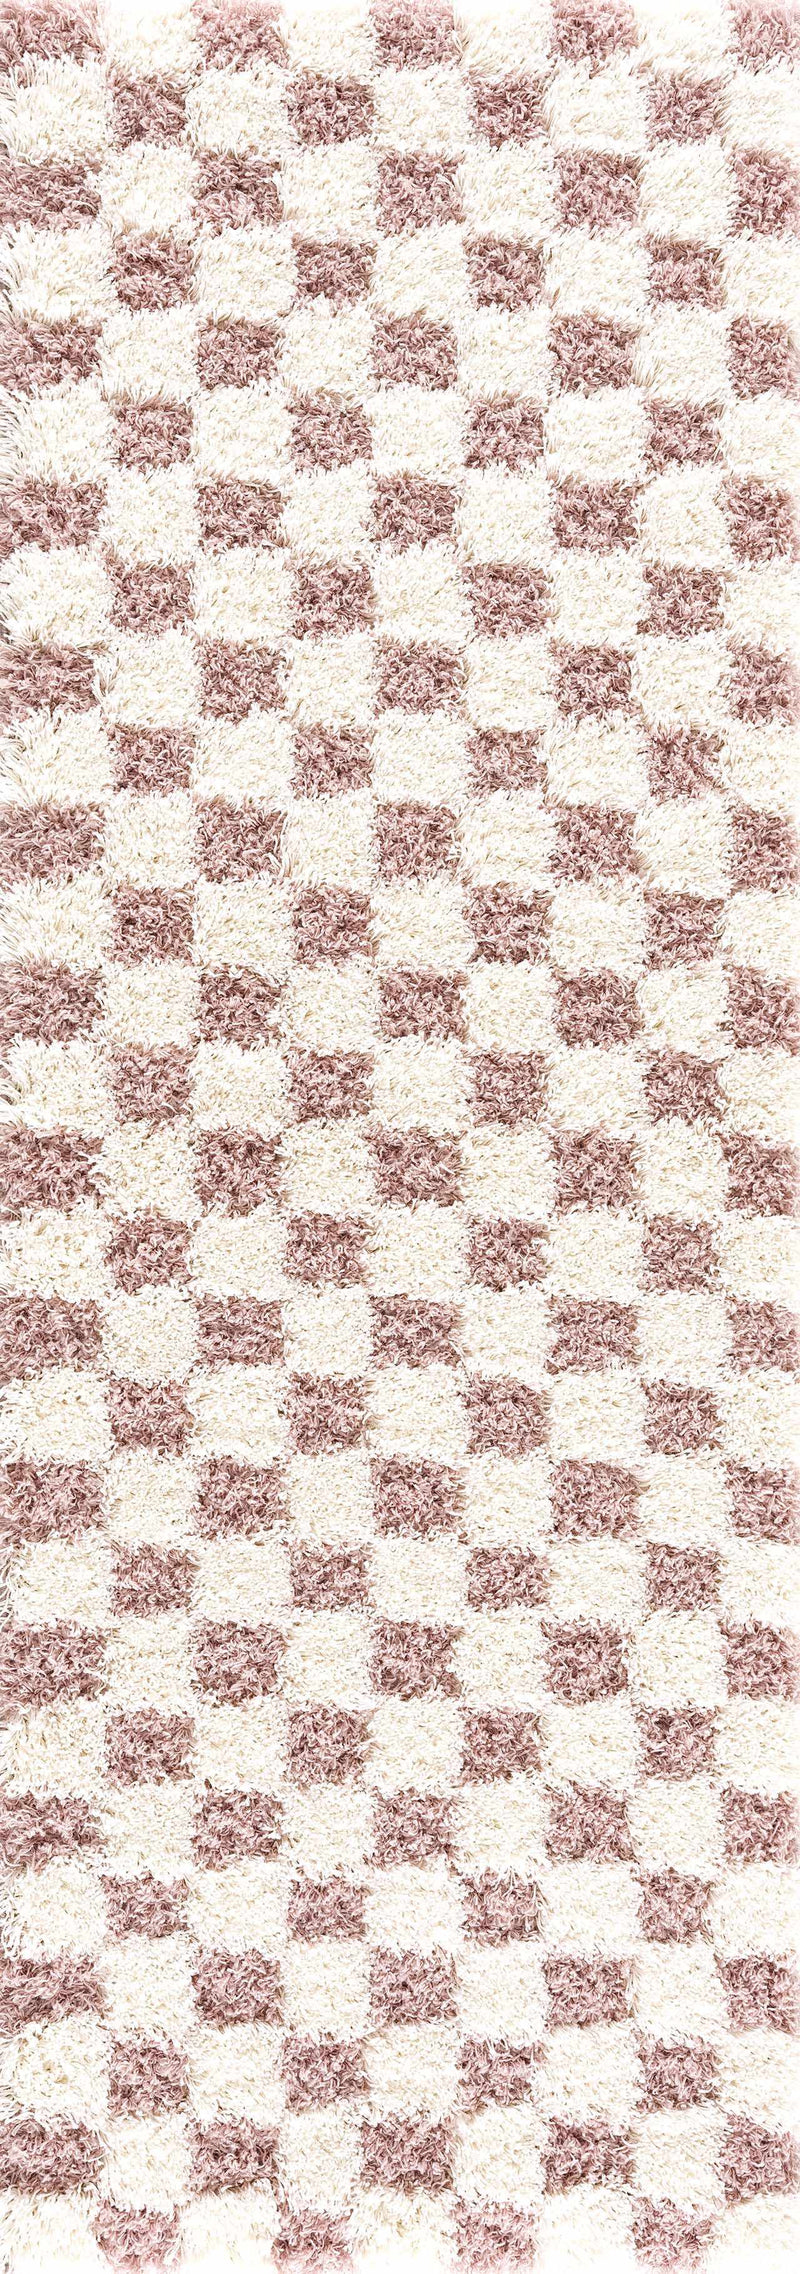 Atira Pink Checkered Area Rug